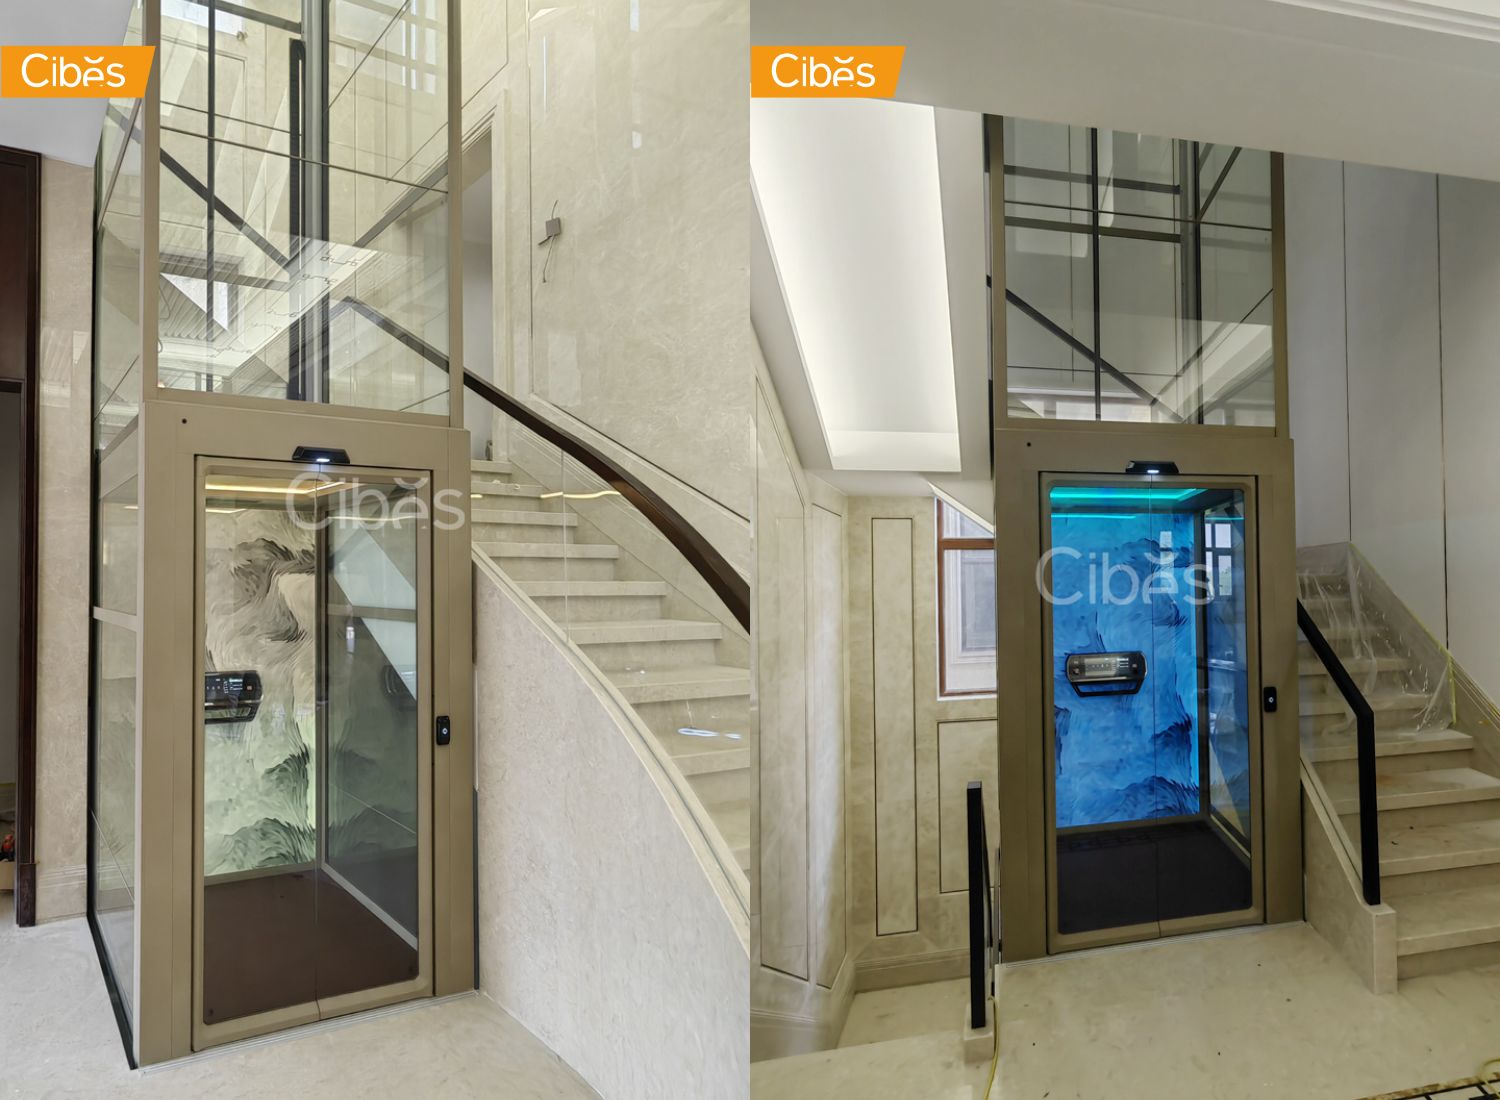 GLOBAL PROJECTS Cibes lift home elevater ซีเบส ลิฟท์ ลิฟต์บ้าน (21)